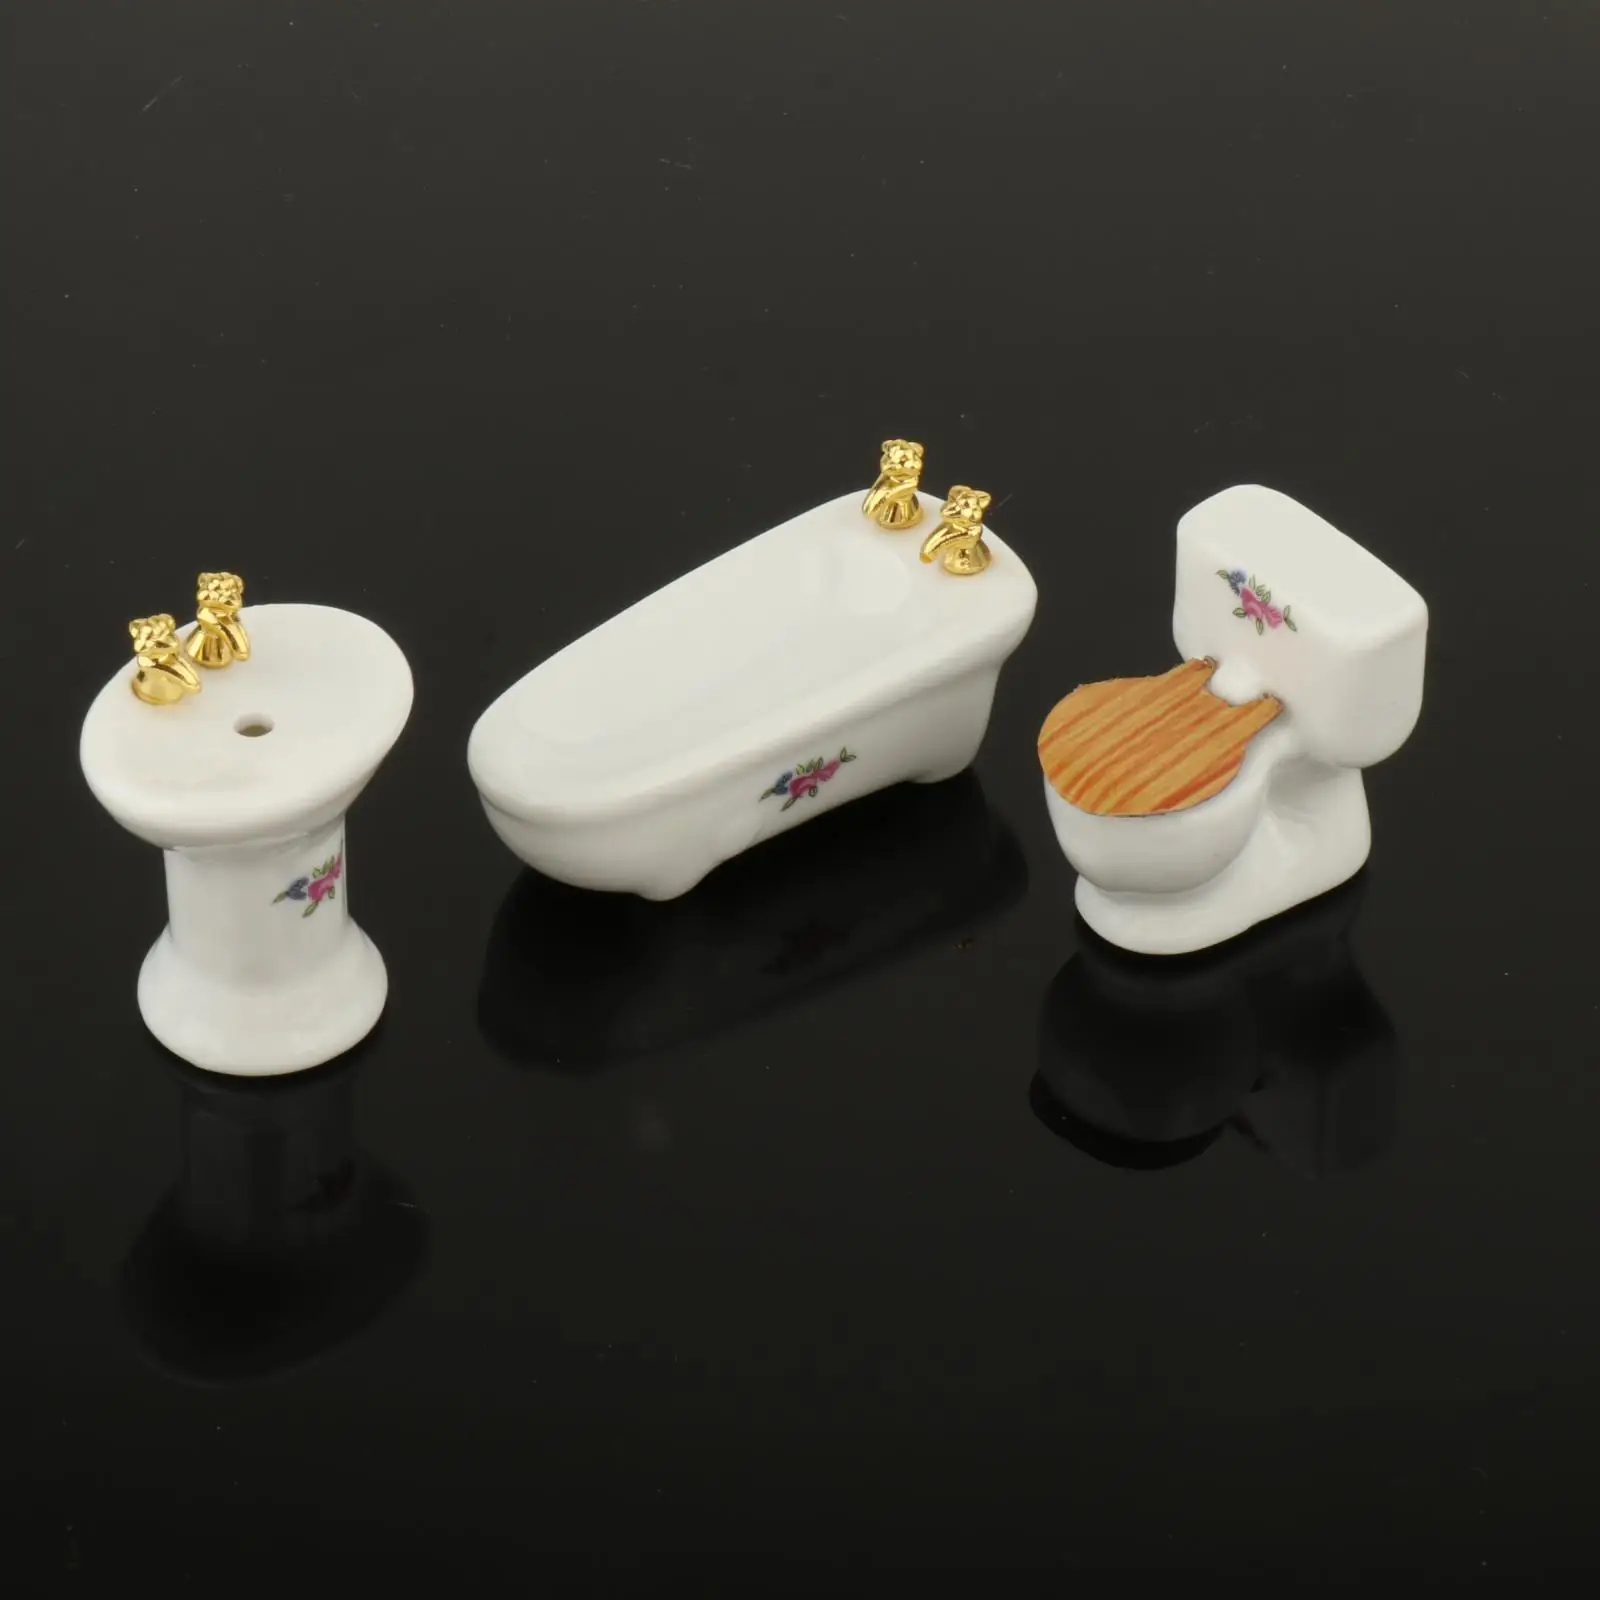 Mini Porcelain Dollhouse Miniature Furniture Toys, Dollhouse Toilet Basin Bathtub Model for 1:24 Dollhouse Bathroom